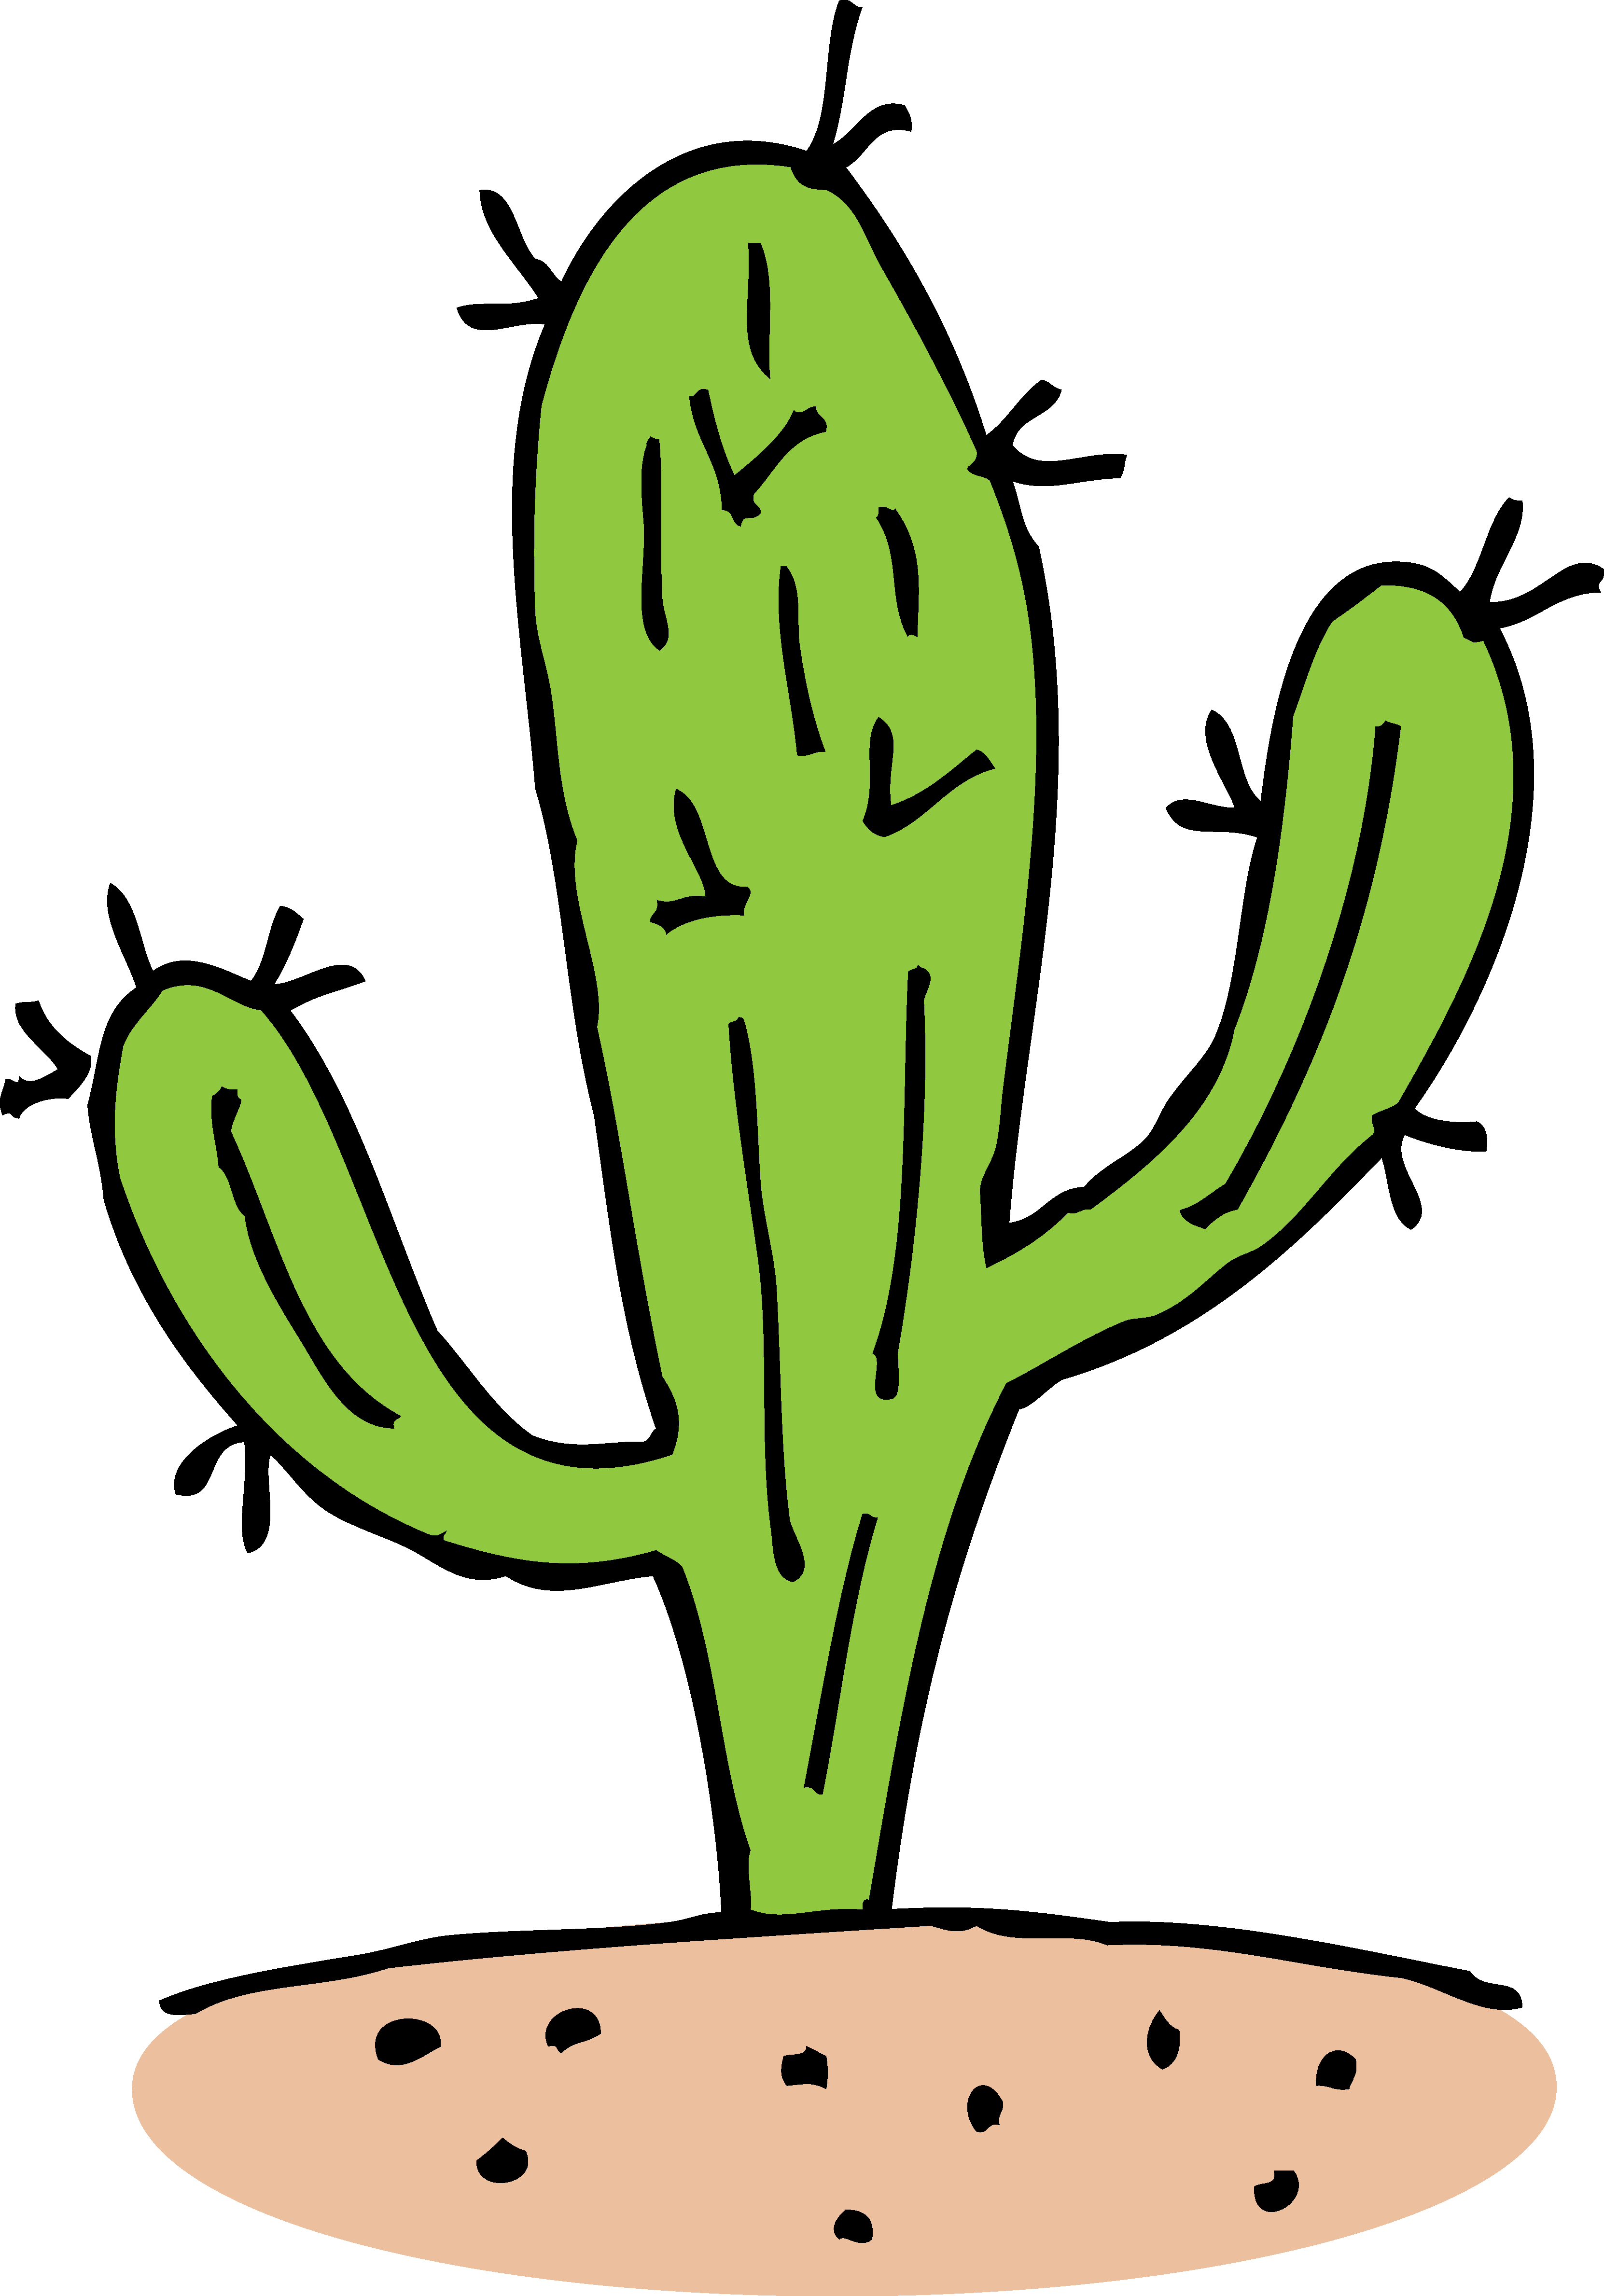 Cactus Cartoon Image